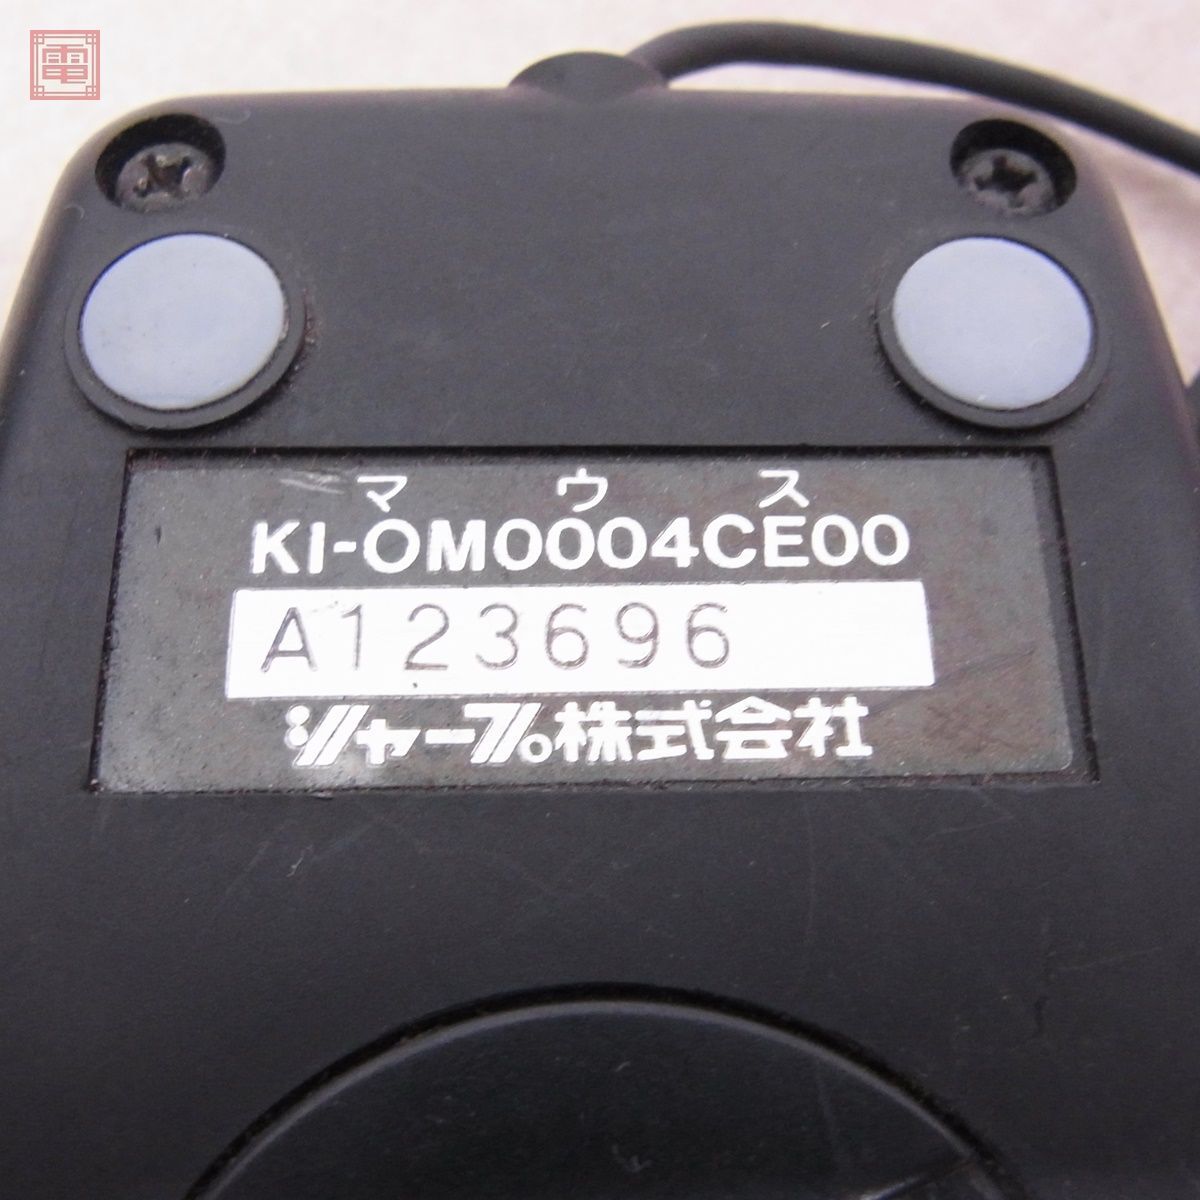  рабочий товар SHARP X68000 мышь KI-OM0004CE00 sharp [10